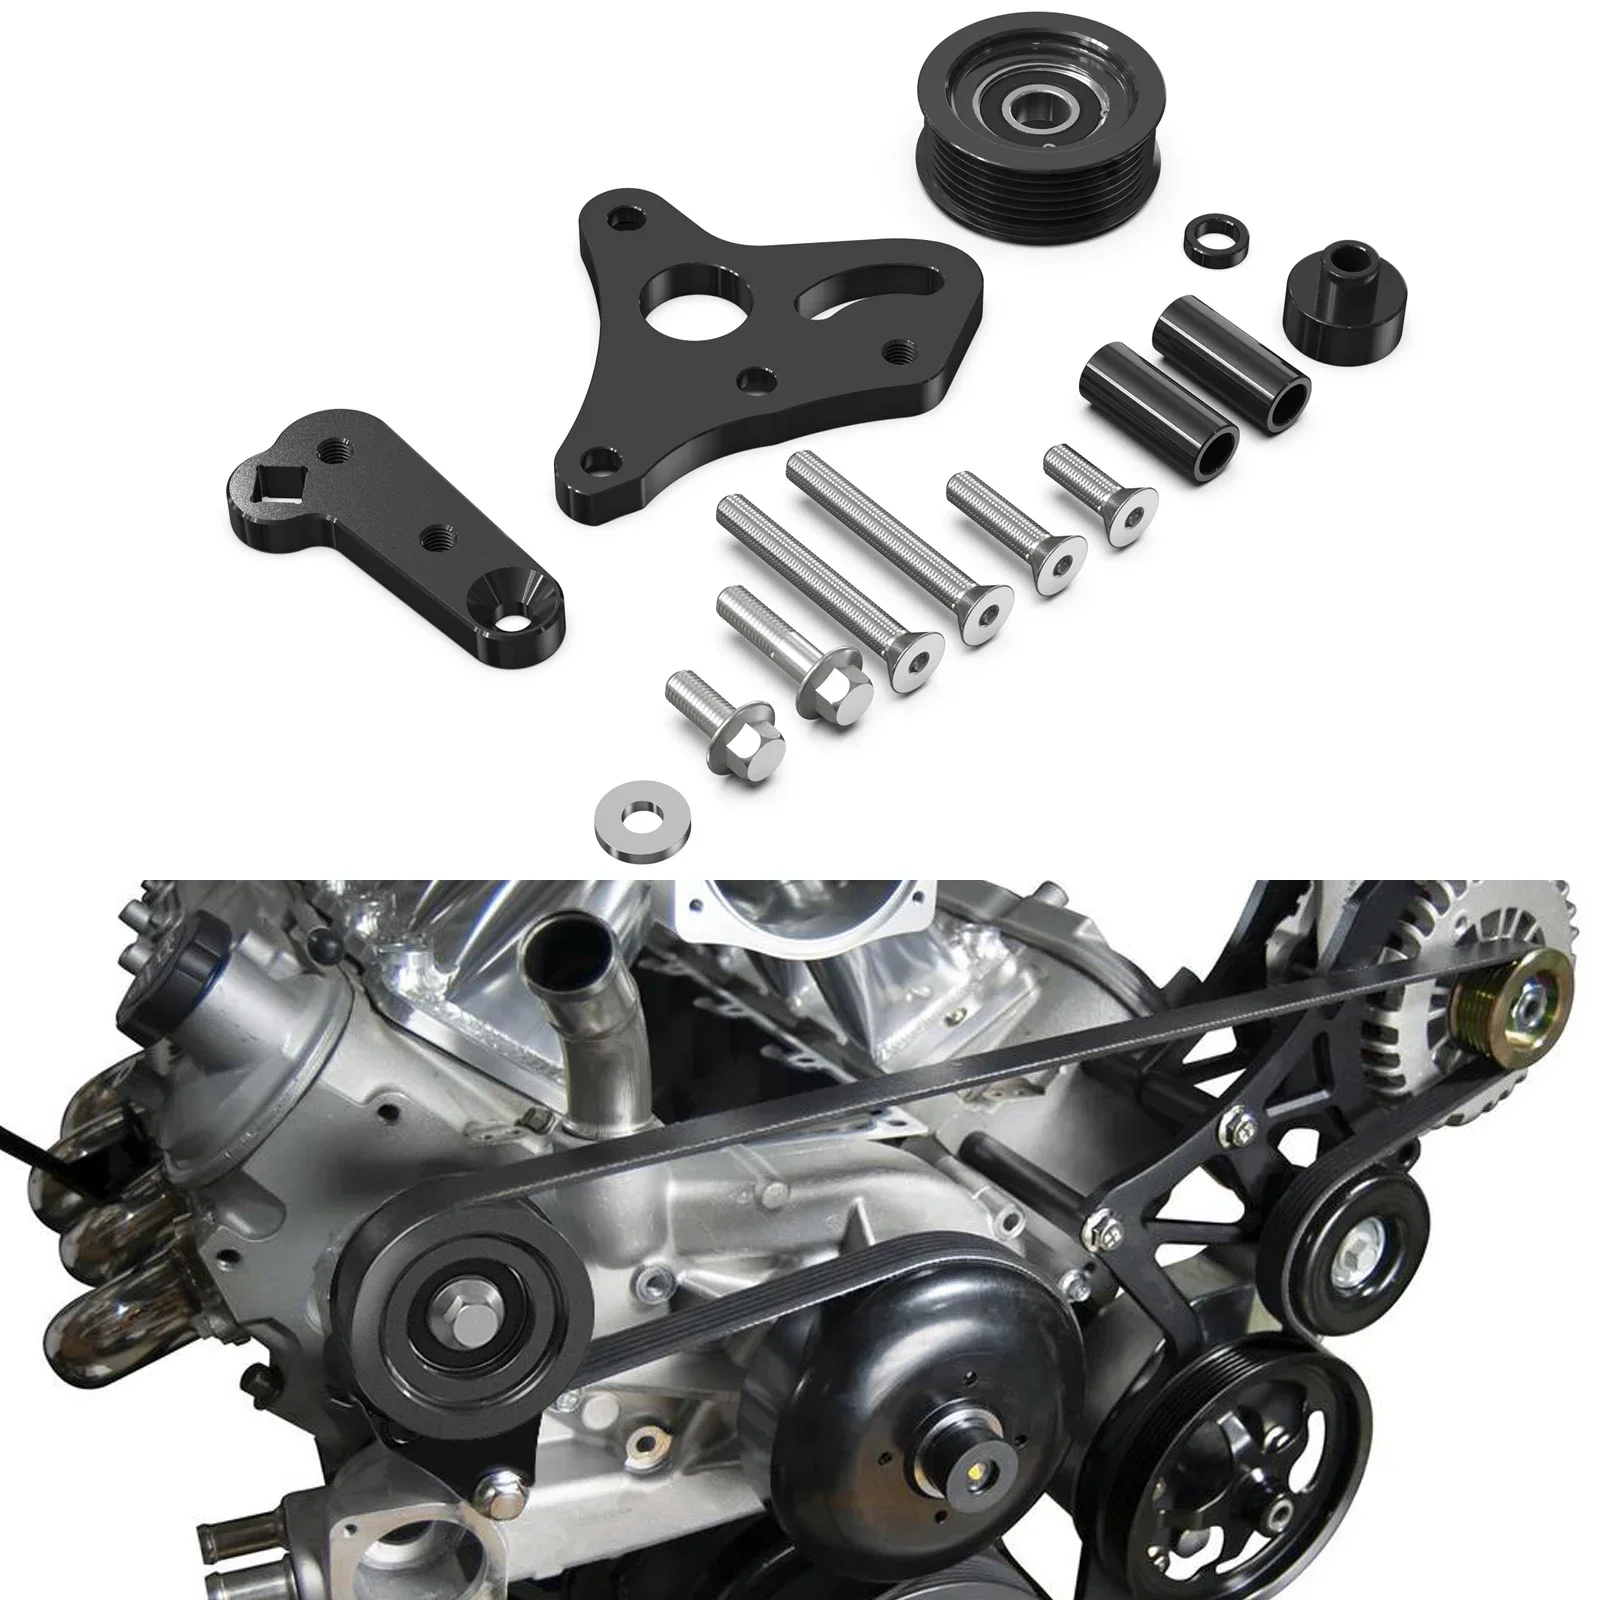 

12580162 Engine Manual Belt Tensioner w/ Pulley For LS Truck LSX 4.8L 5.3L 6.0L 6.2L For CADILLAC HUMMER GMC CHEVROLET Car Parts